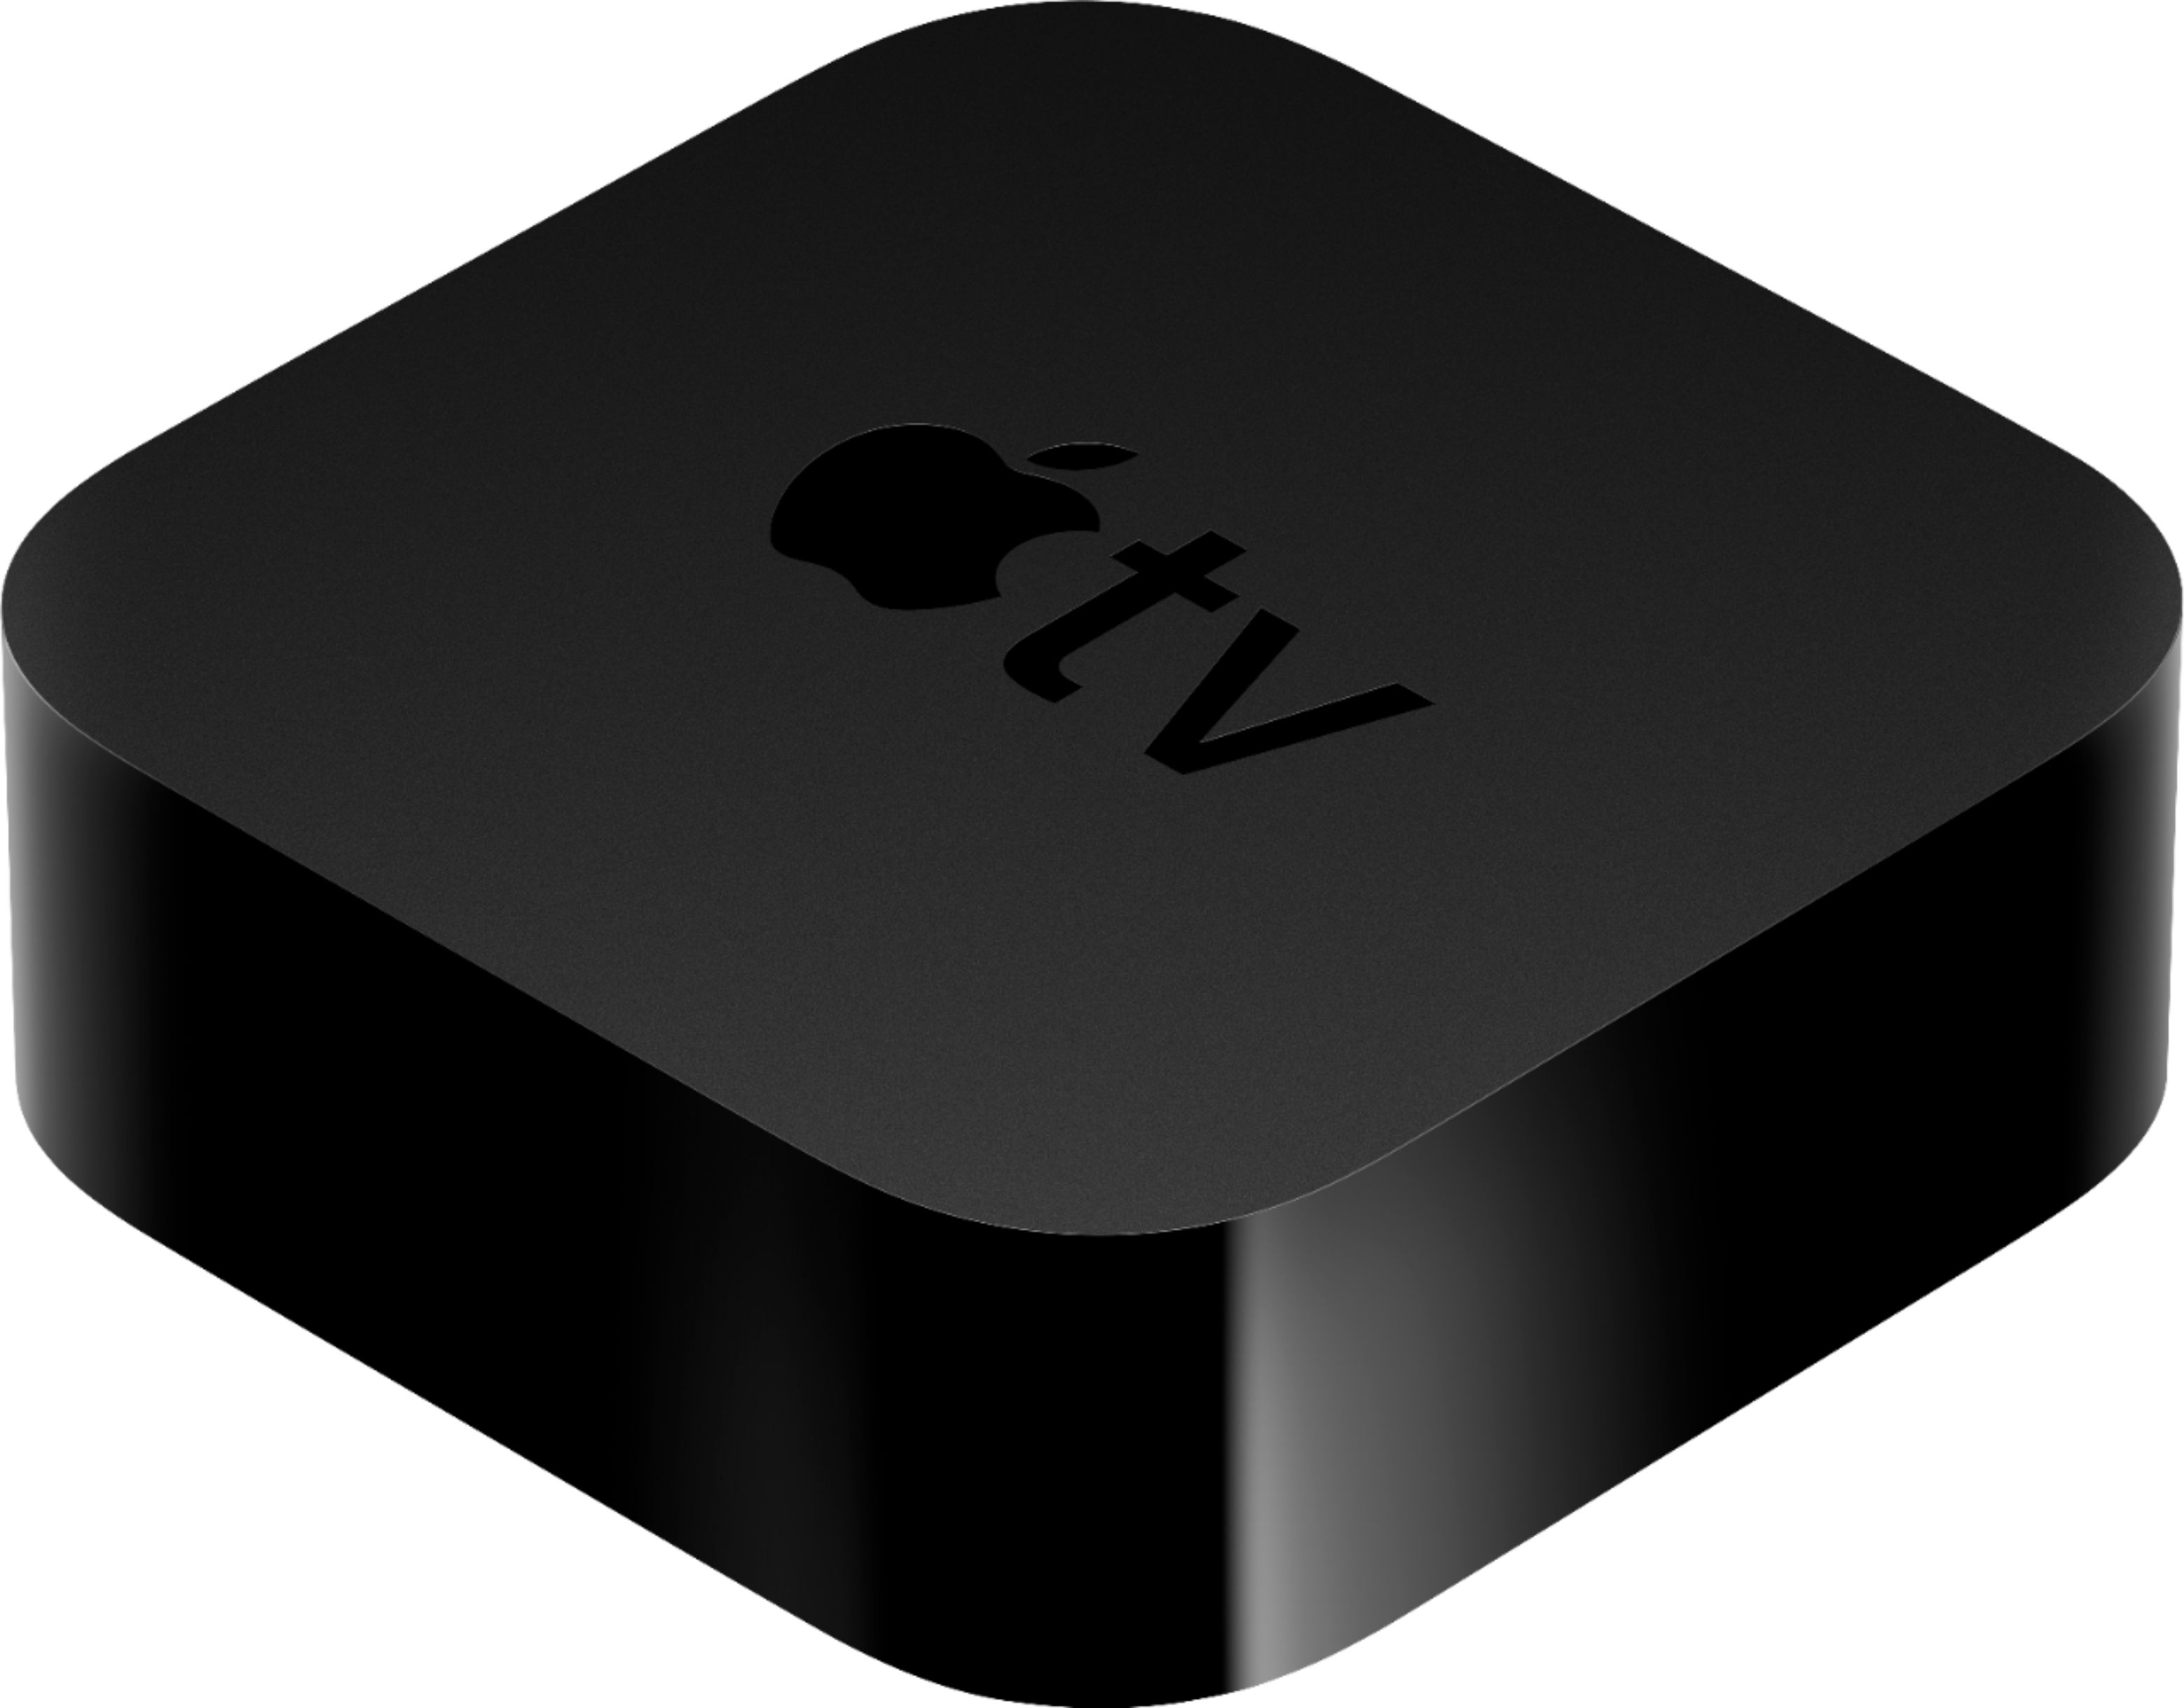 Apple TV 4K 64GB (2nd Generation) Black MXH02LL/A - Best Buy